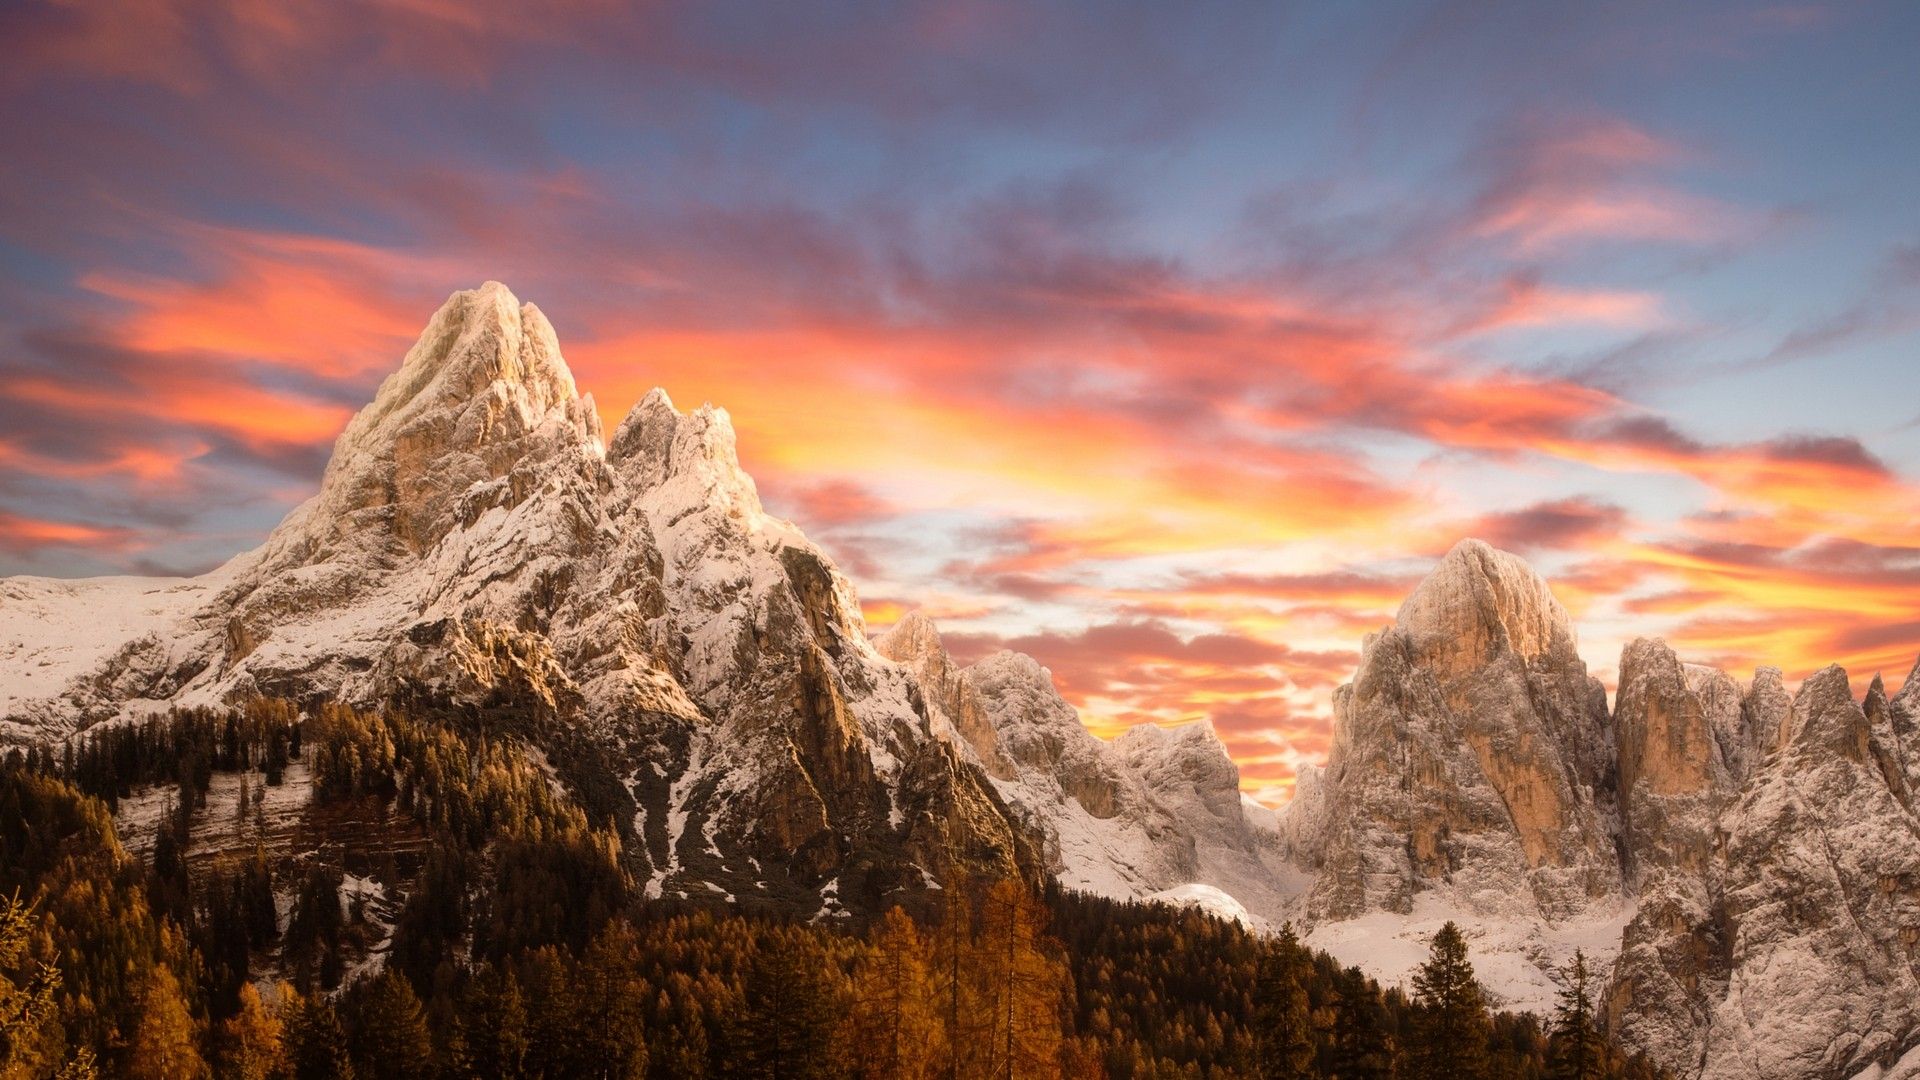 Dolomites Mountains, HD Nature, 4k Wallpaper, Image, Background